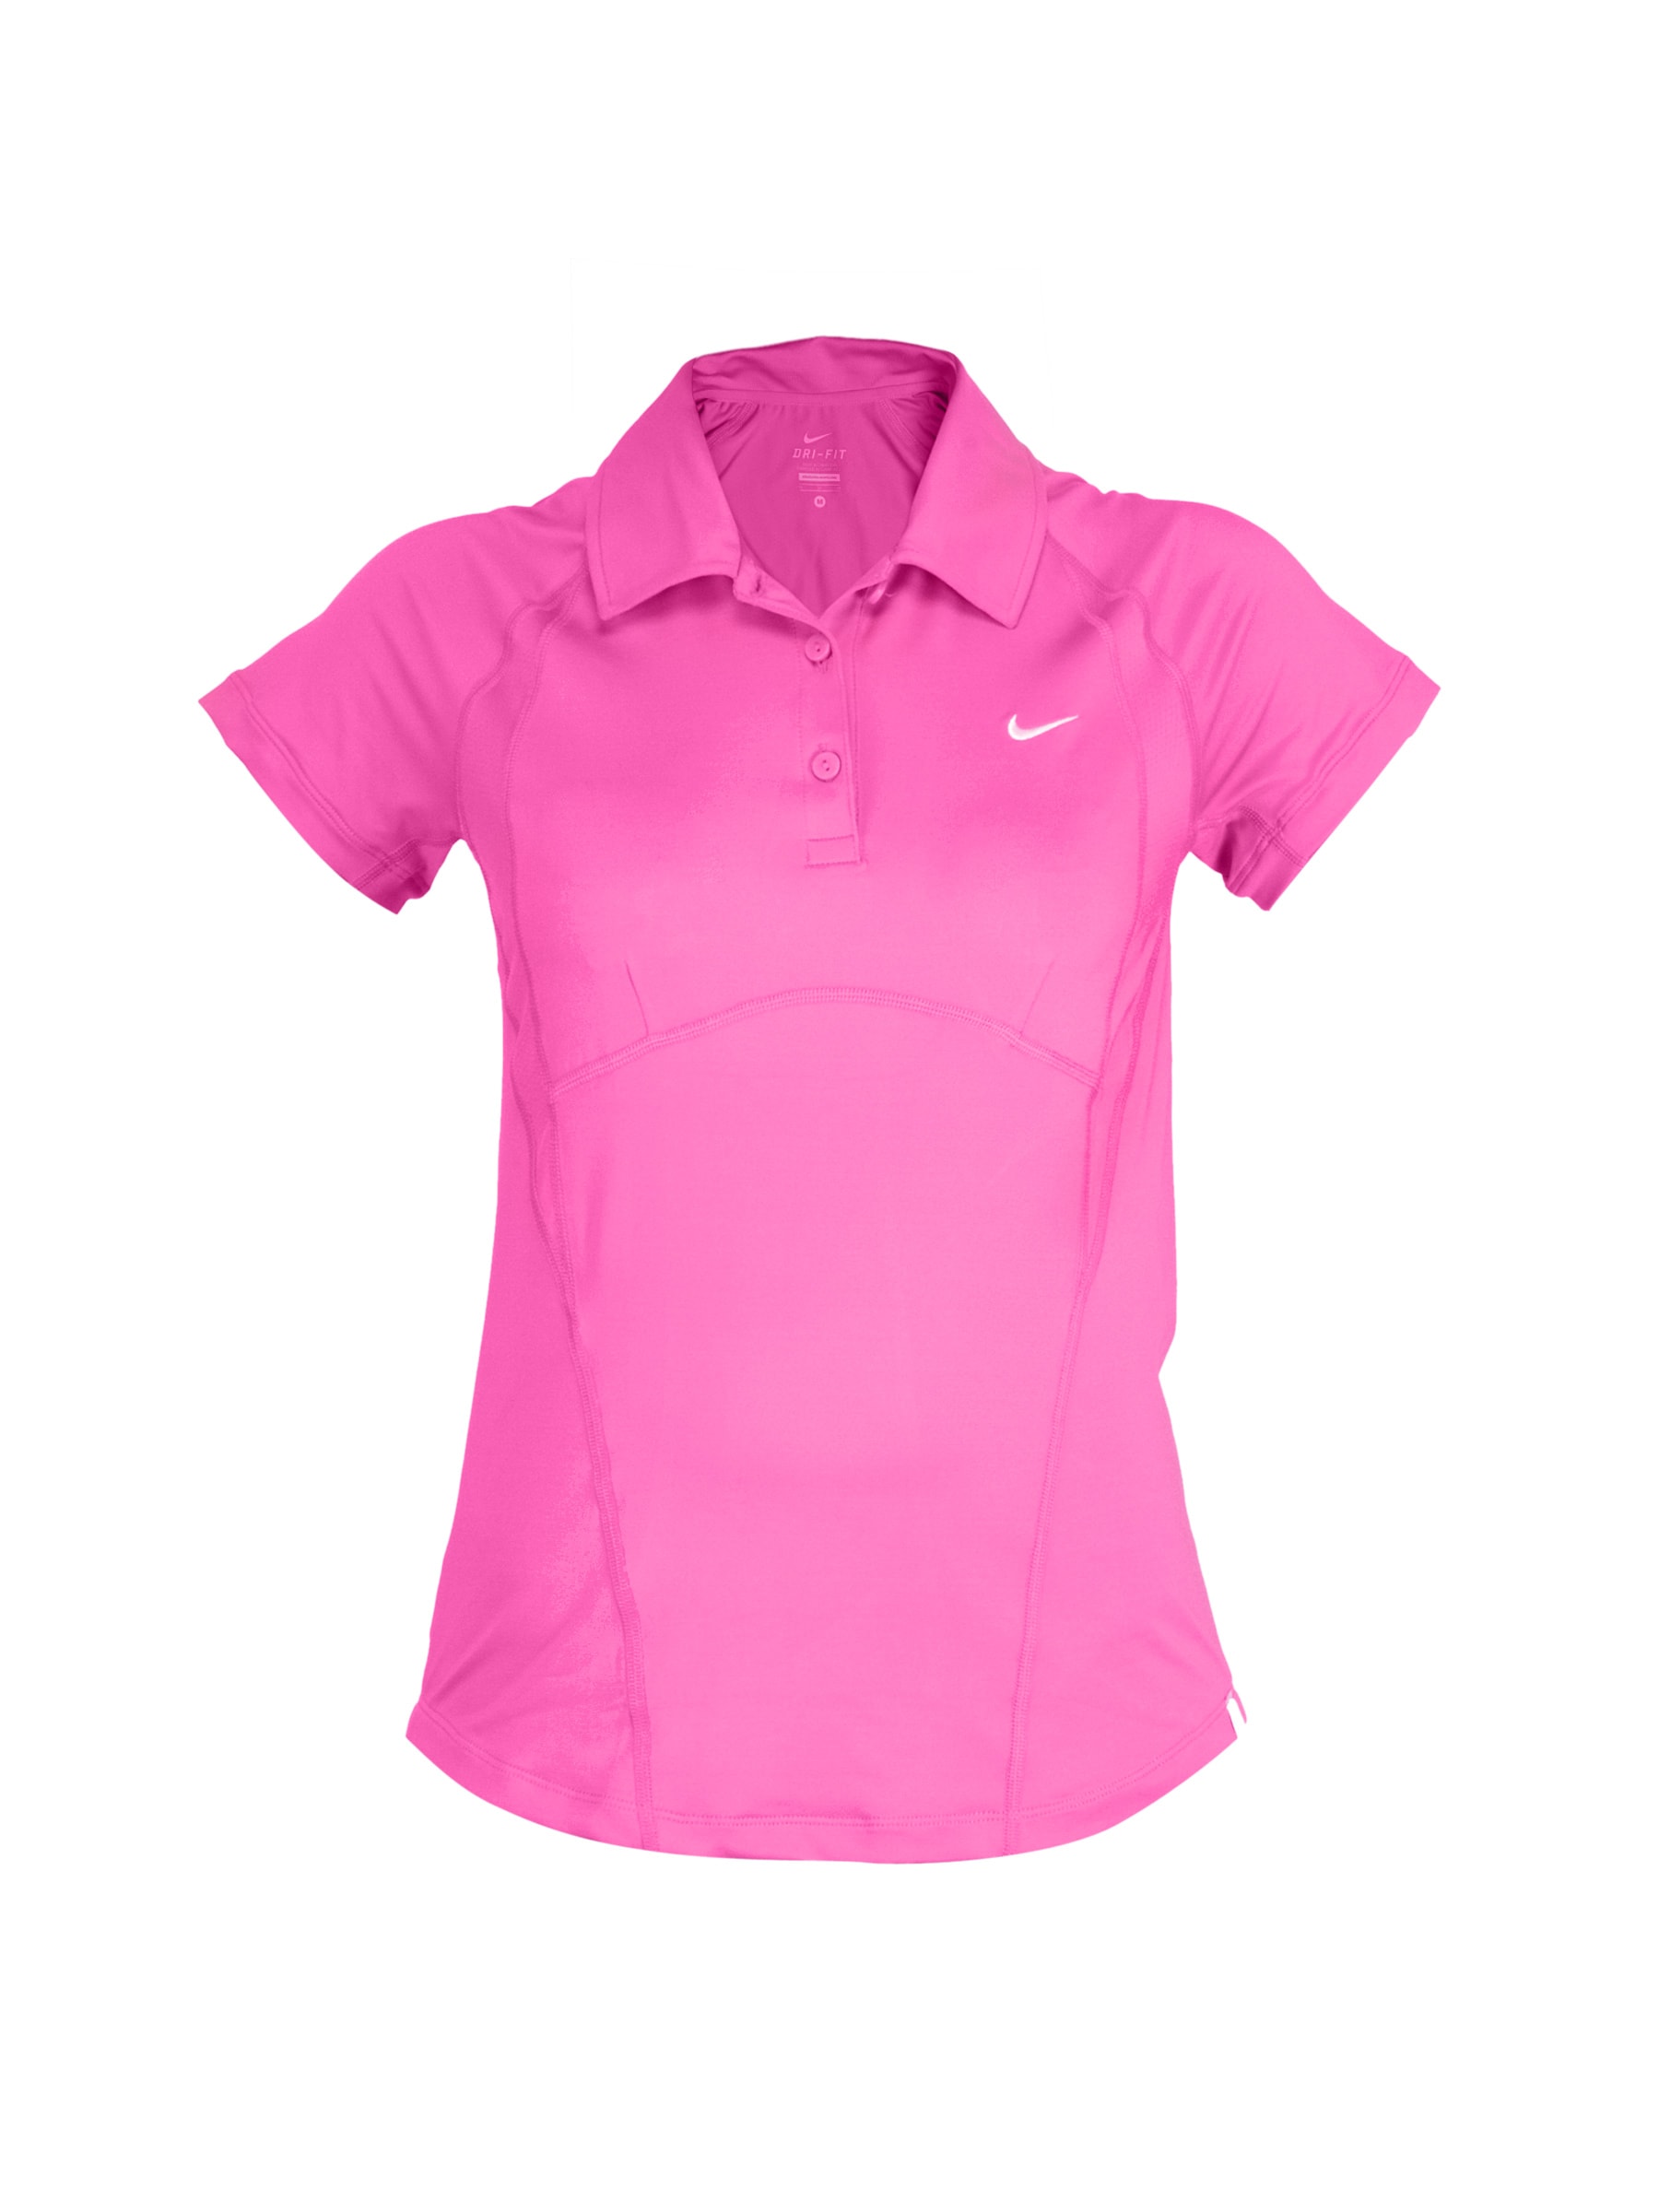 Nike Women Smash Pink T-shirt